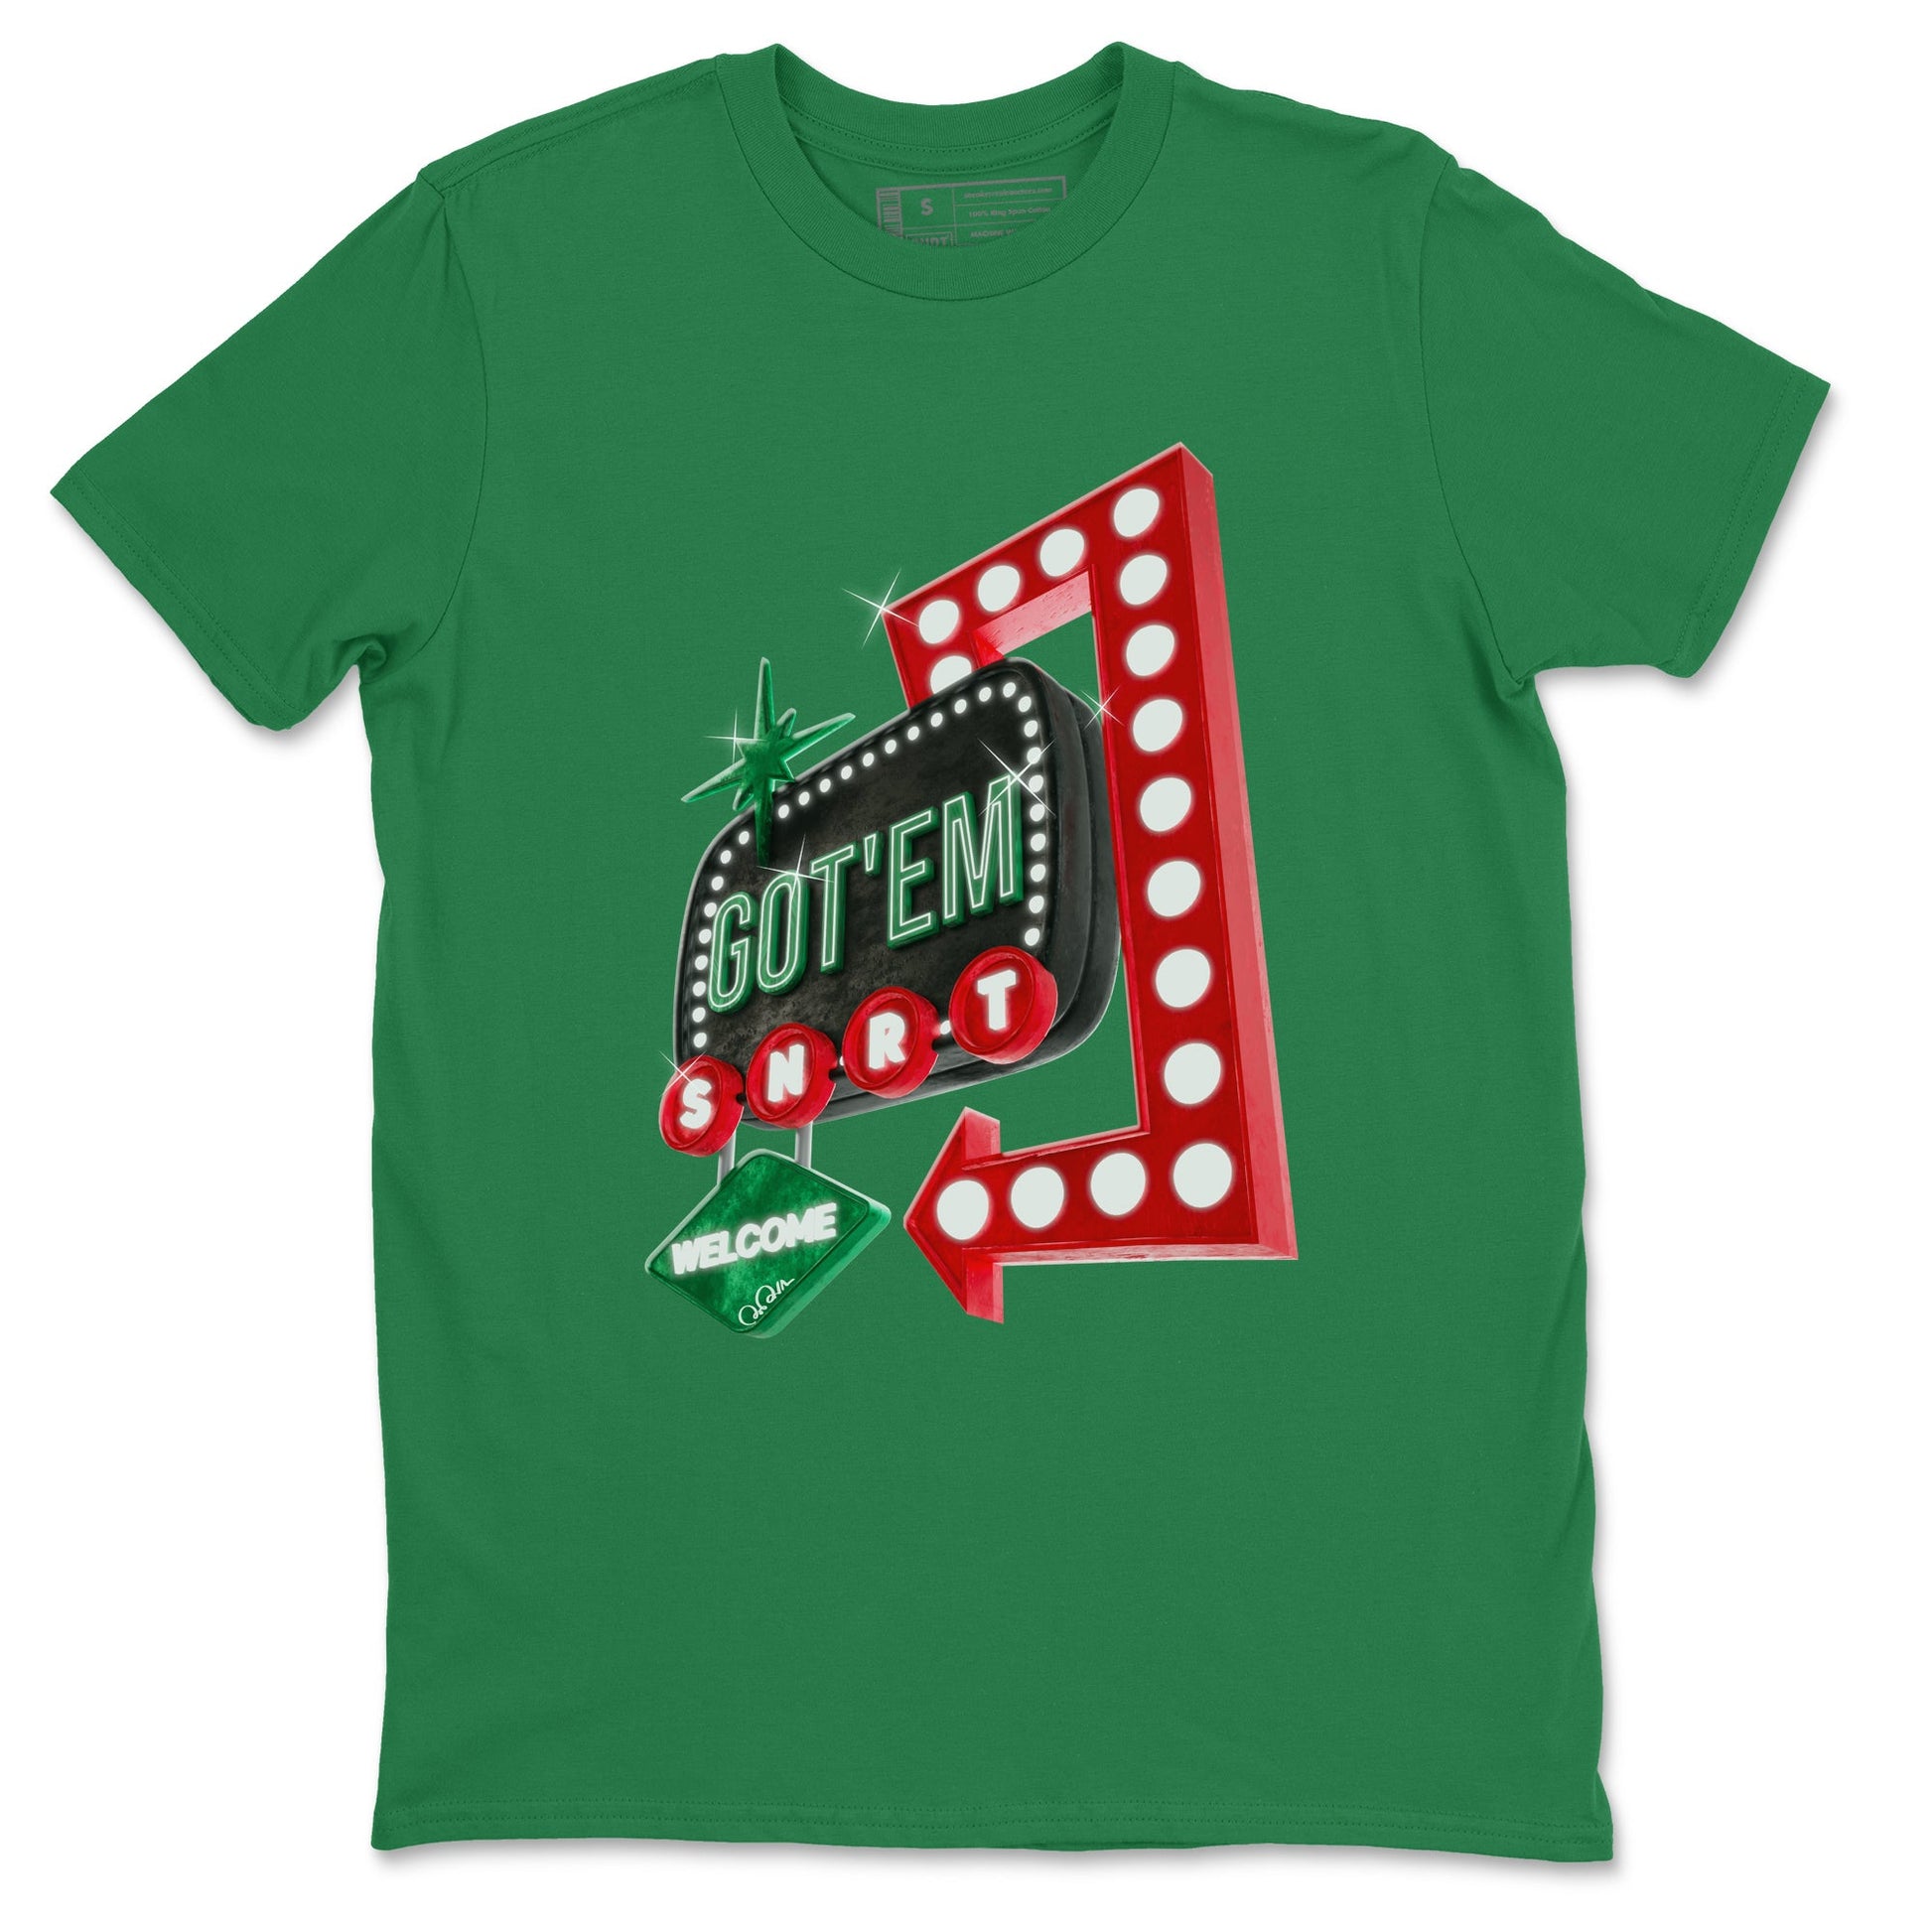 2s Christmas X-mas gift shirt to match jordans Retro Neon Sign sneaker tees Air Jordan 2 Christmas SNRT Sneaker Release Tees Unisex Kelly Green 2 T-Shirt